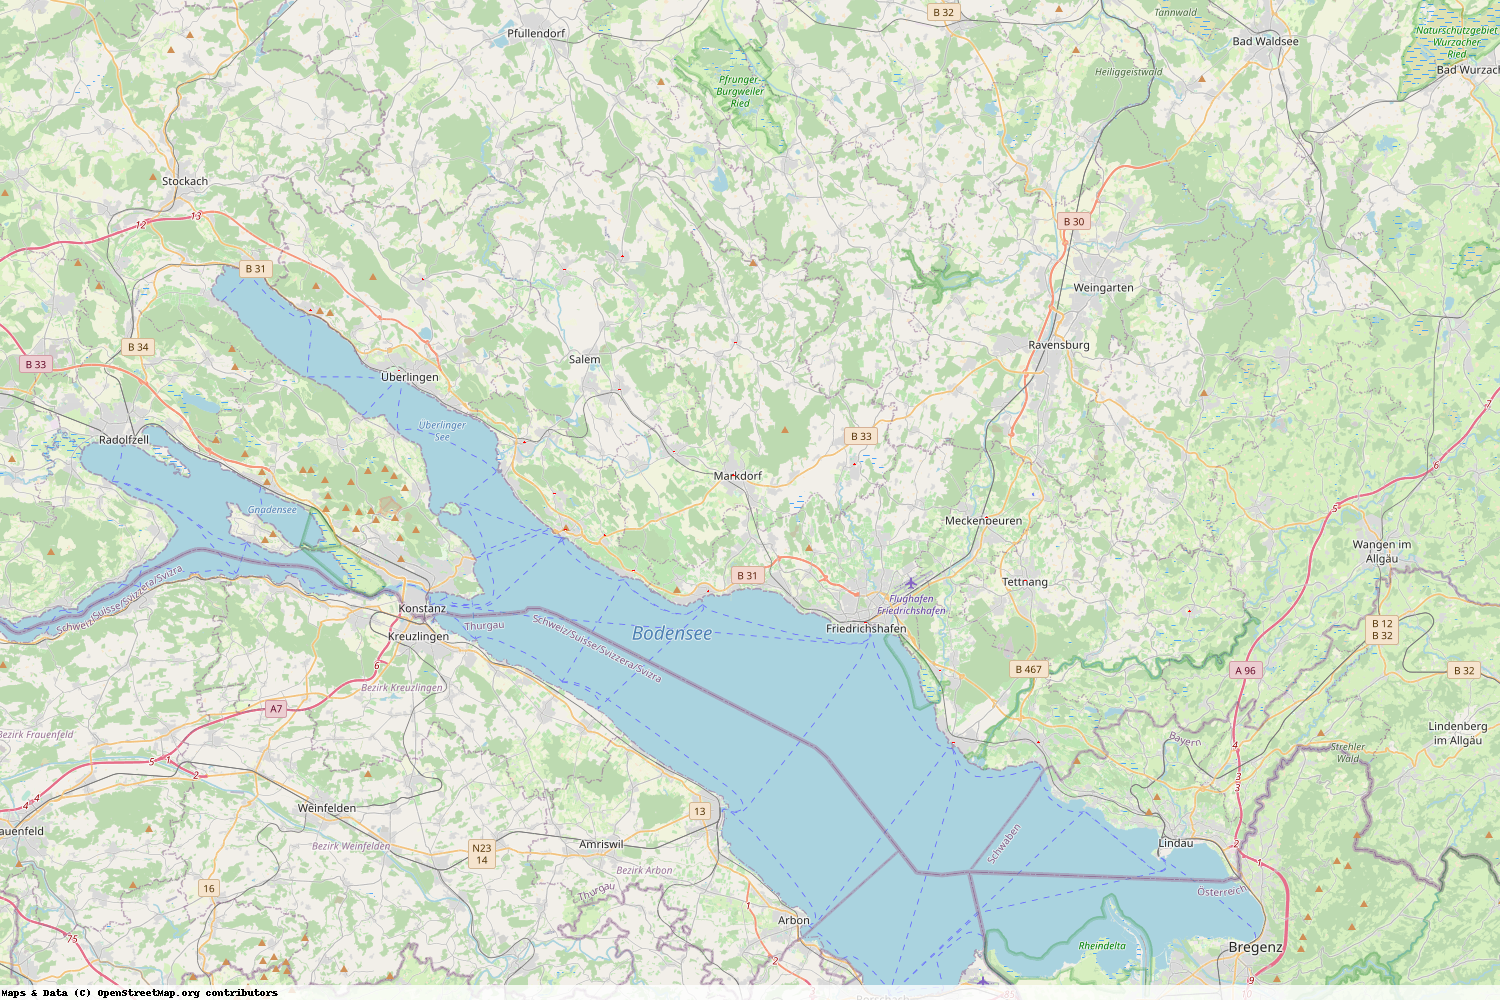 Ist gerade Stromausfall in Baden-Württemberg - Bodenseekreis?